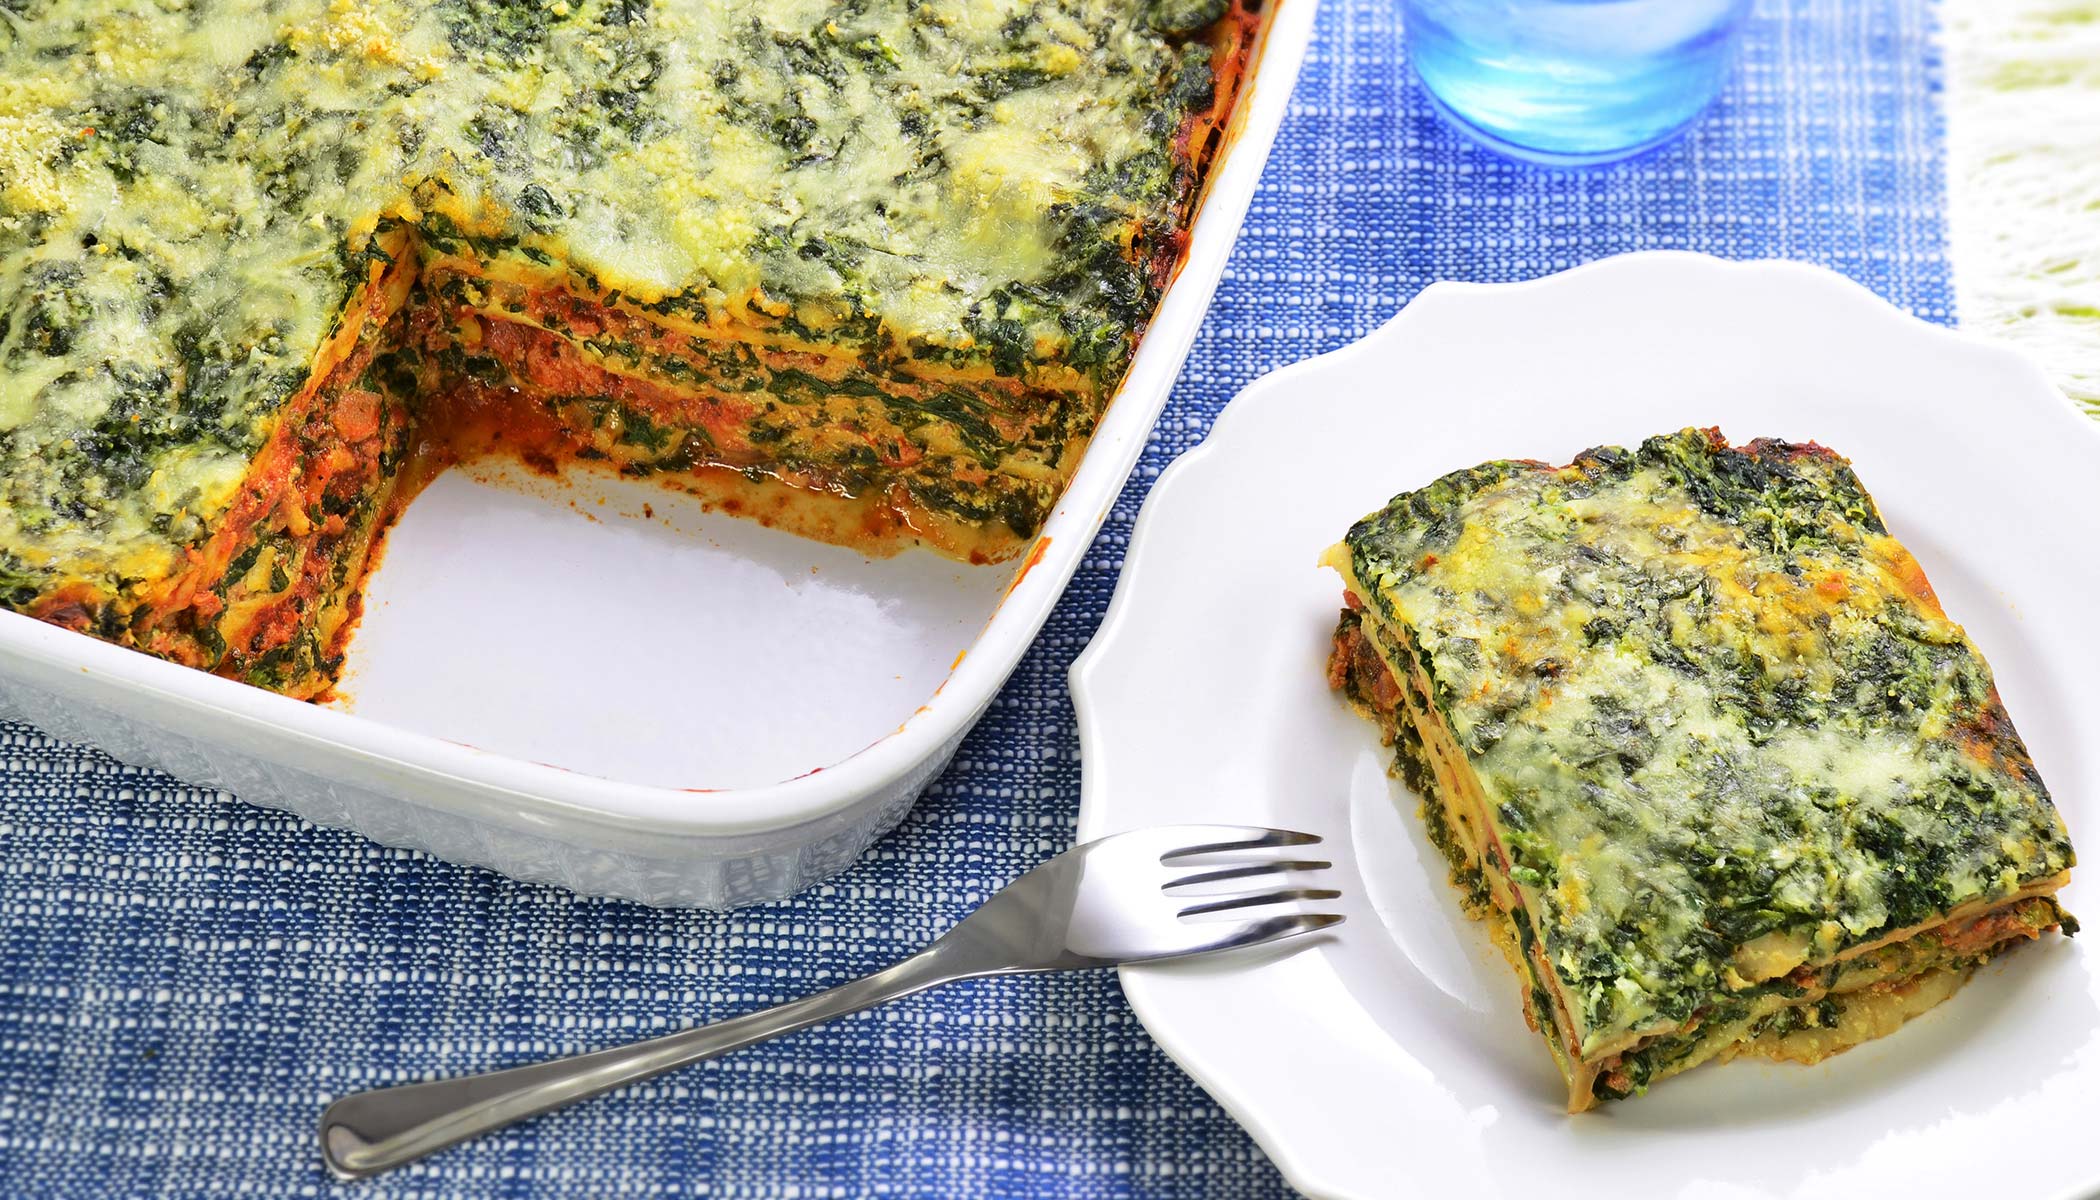 Zojirushi Recipe – Spinach and Turkey Lasagna